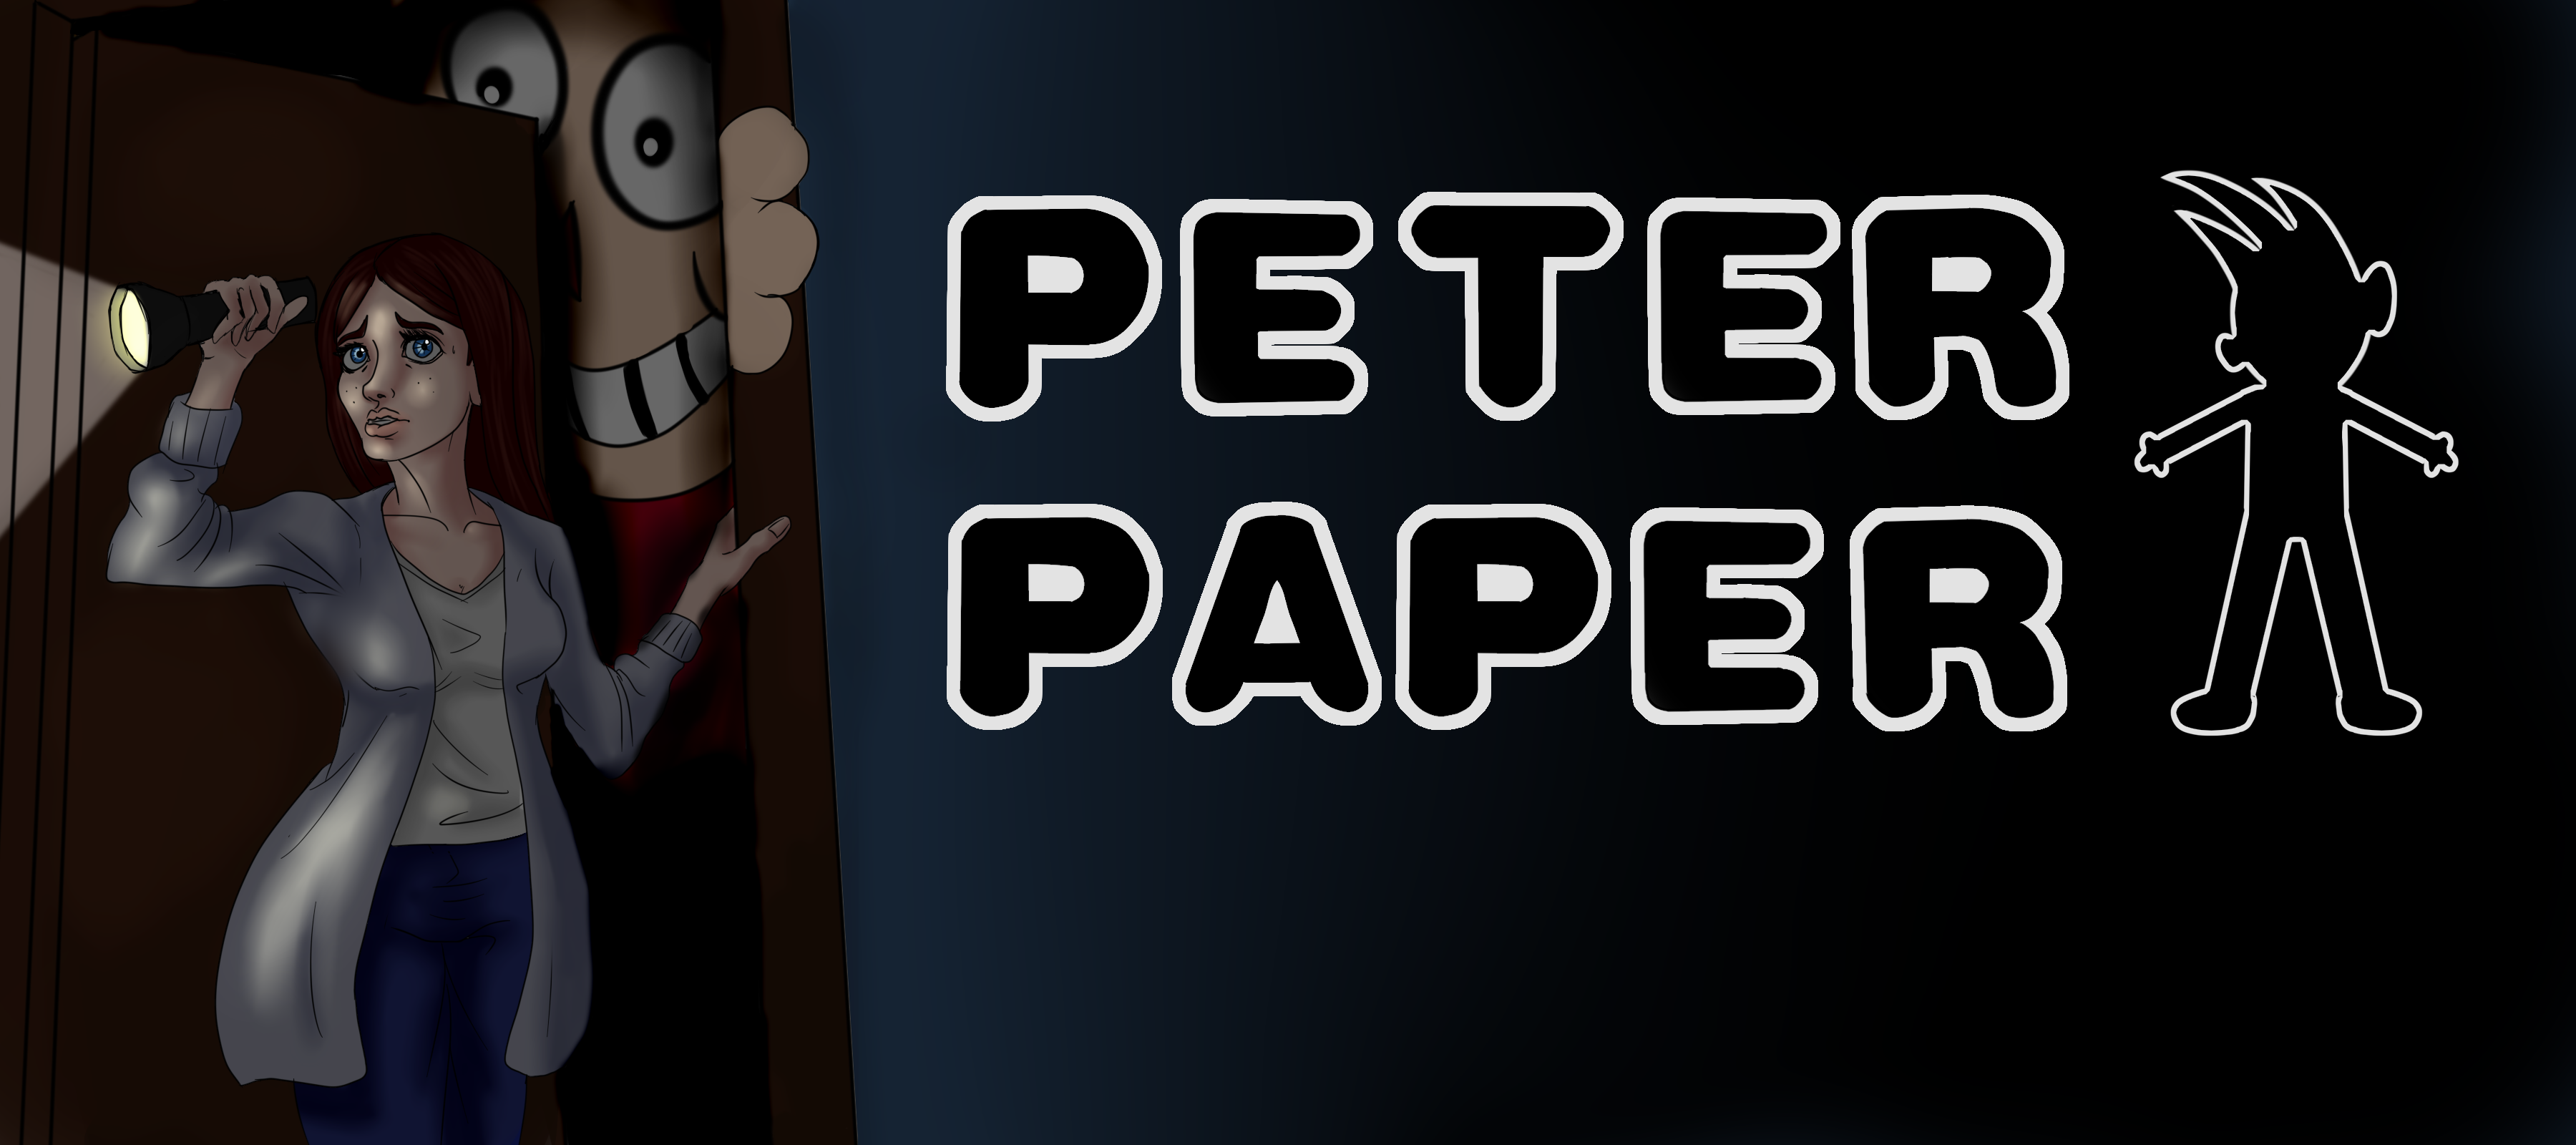 Peter Paper